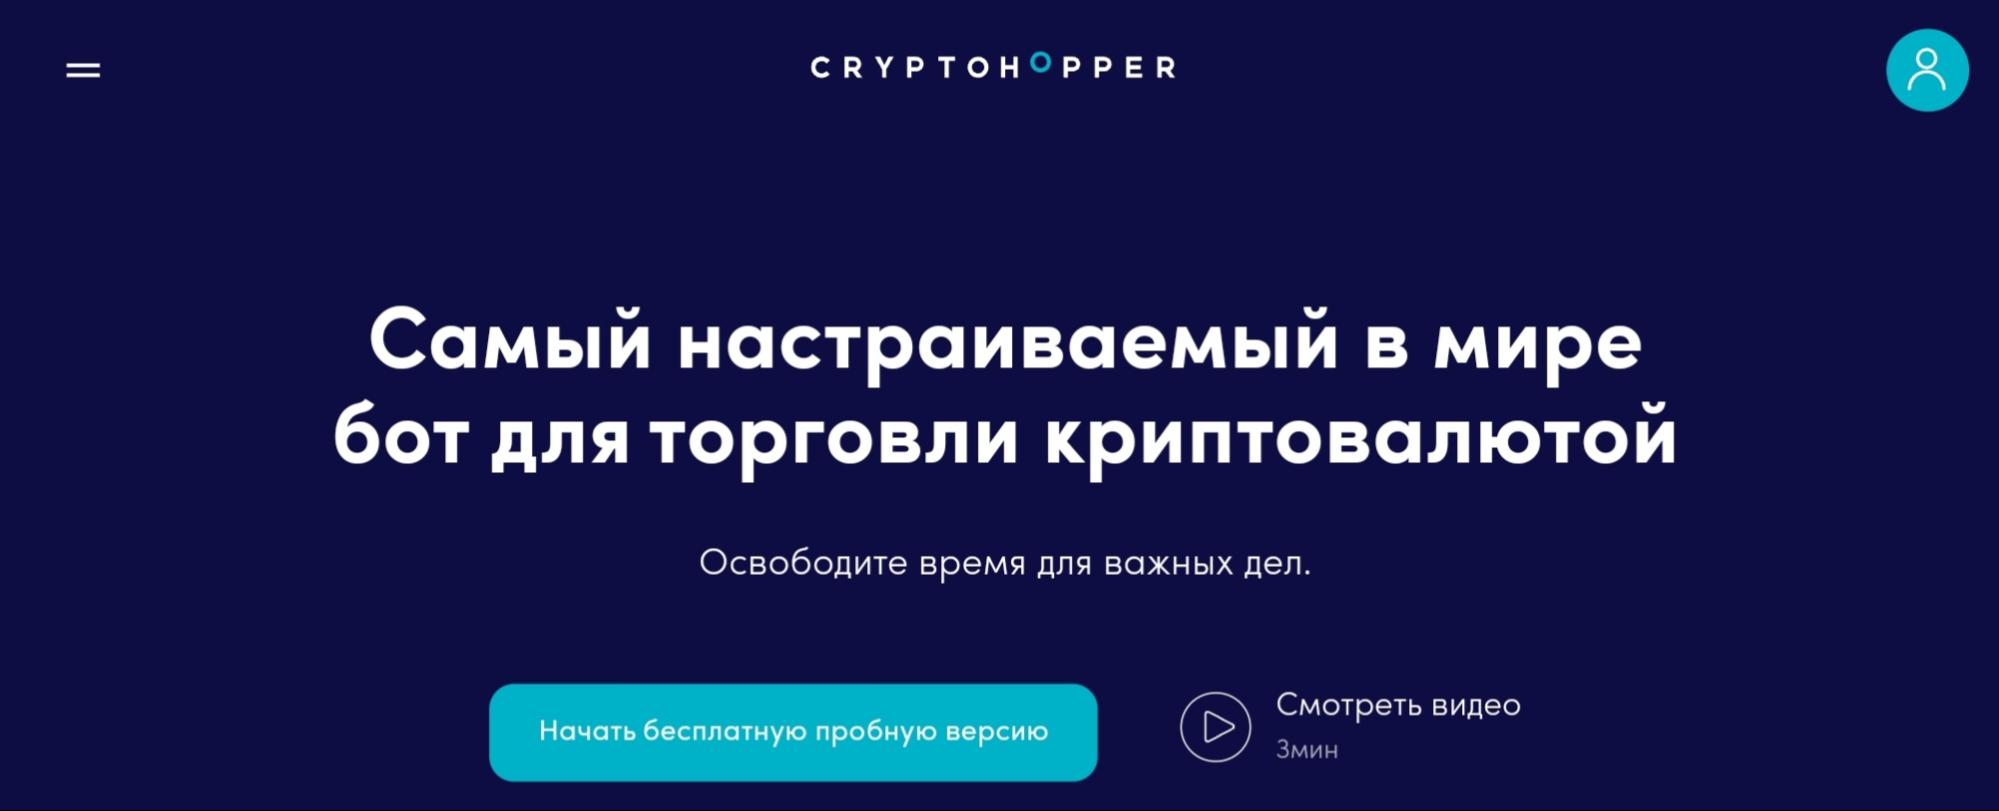 Cryptohopper сайт